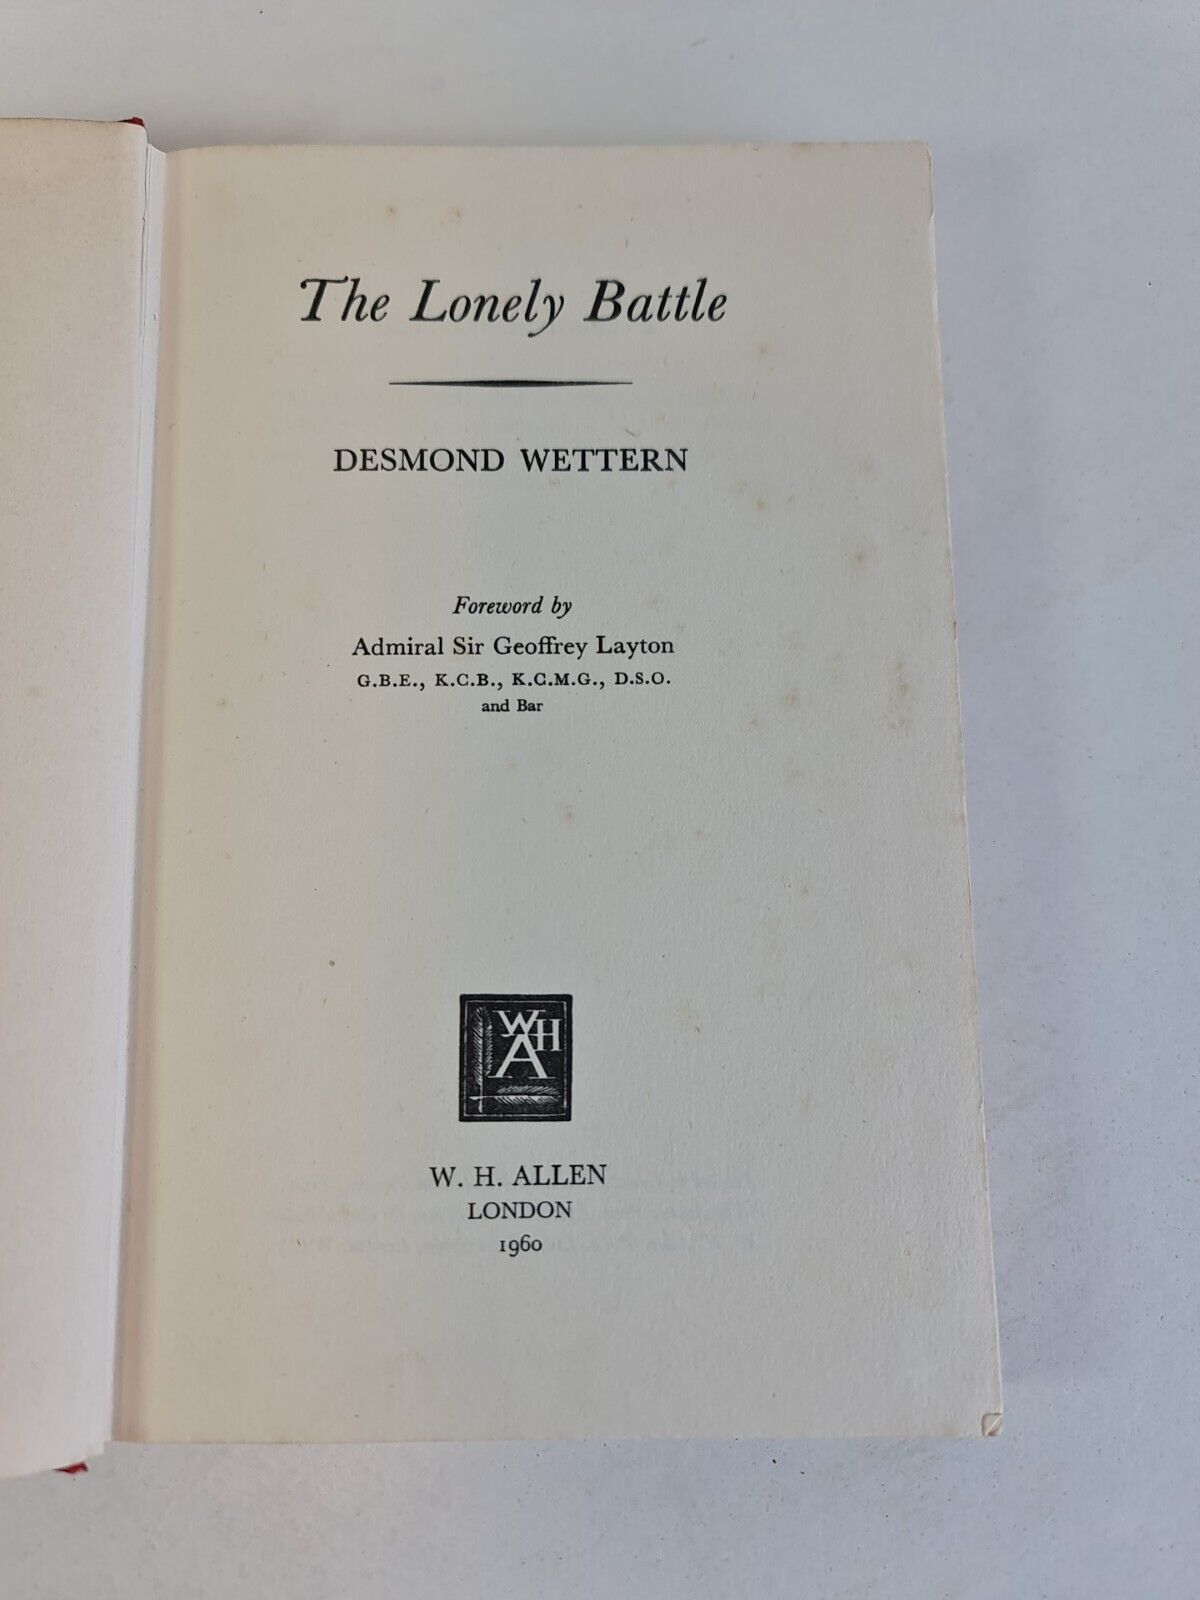 The Lonely Battle by Desmond Wettern (1960)